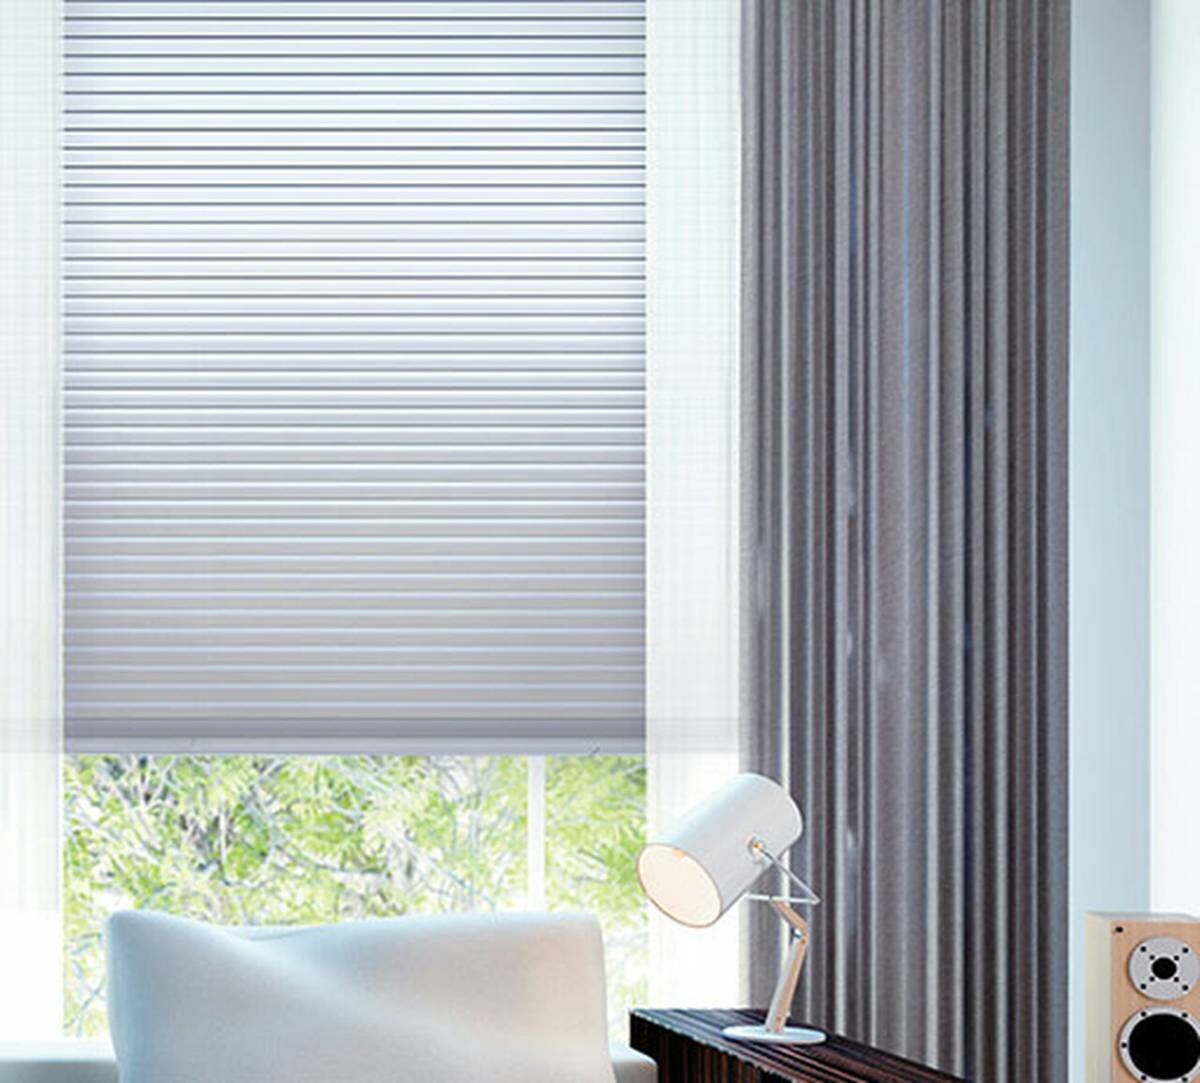 Norman CityLights window blinds wood blinds aluminum blinds custom blinds — Killeen, Texas (TX)